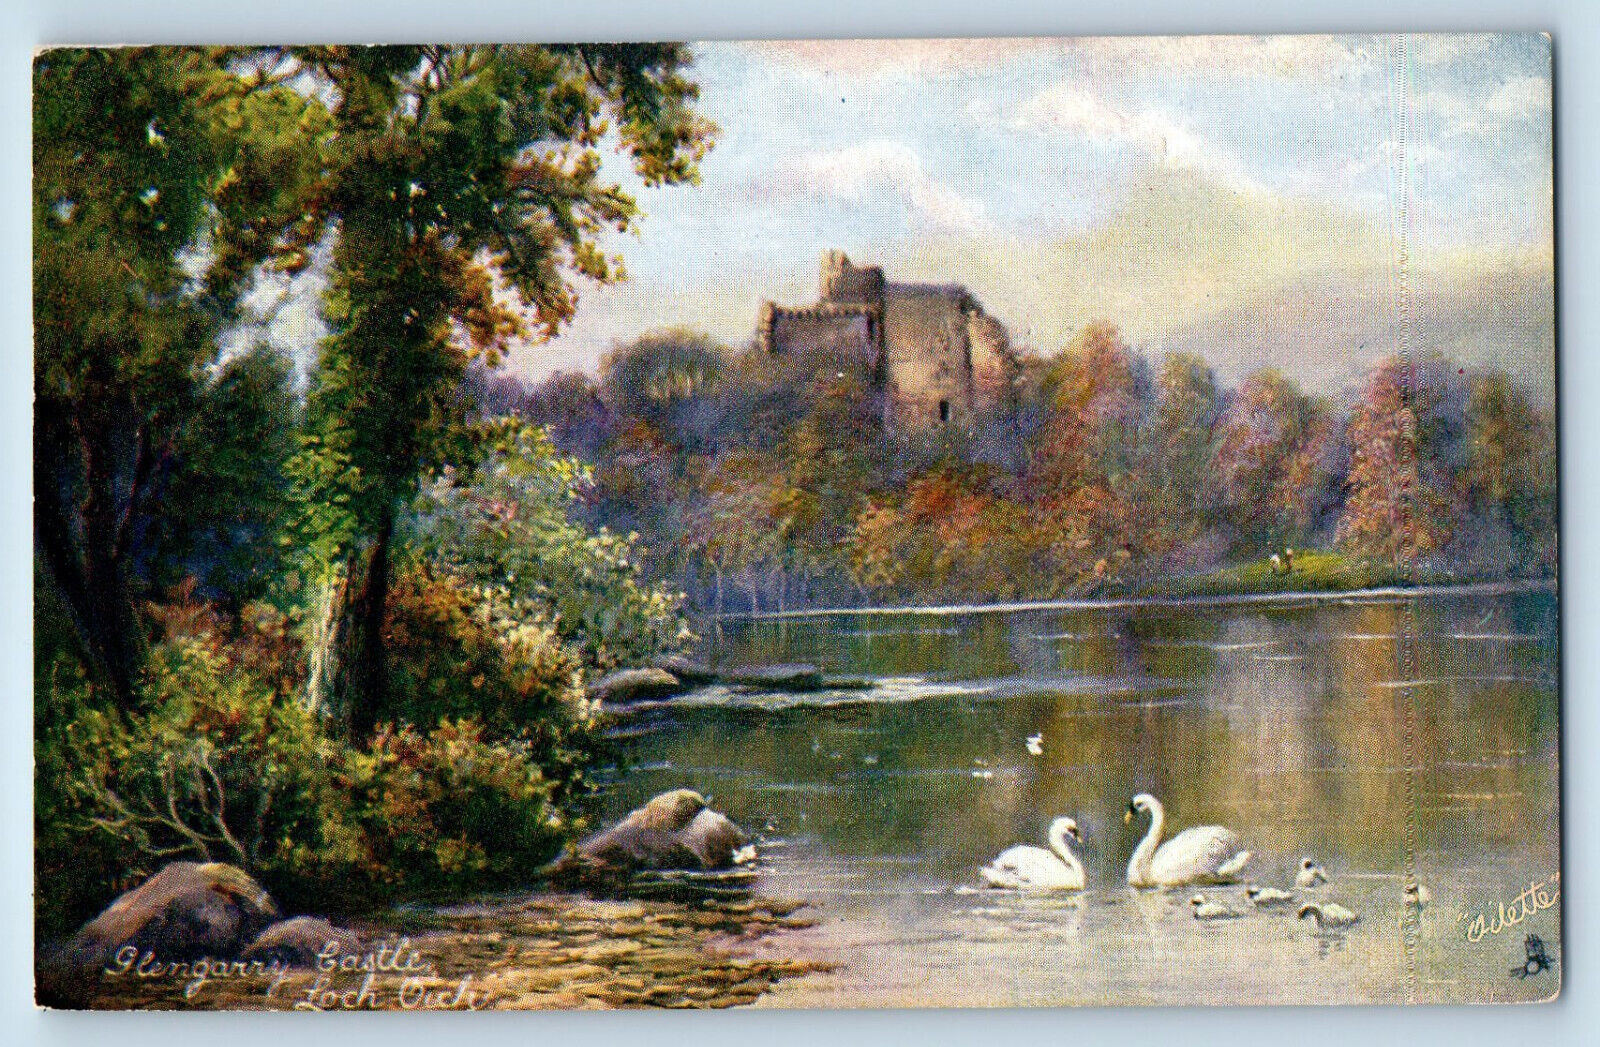 Invergarry Scotland Postcard Glengarry Castle Loch Oich c1910 Oilette Tuck Art